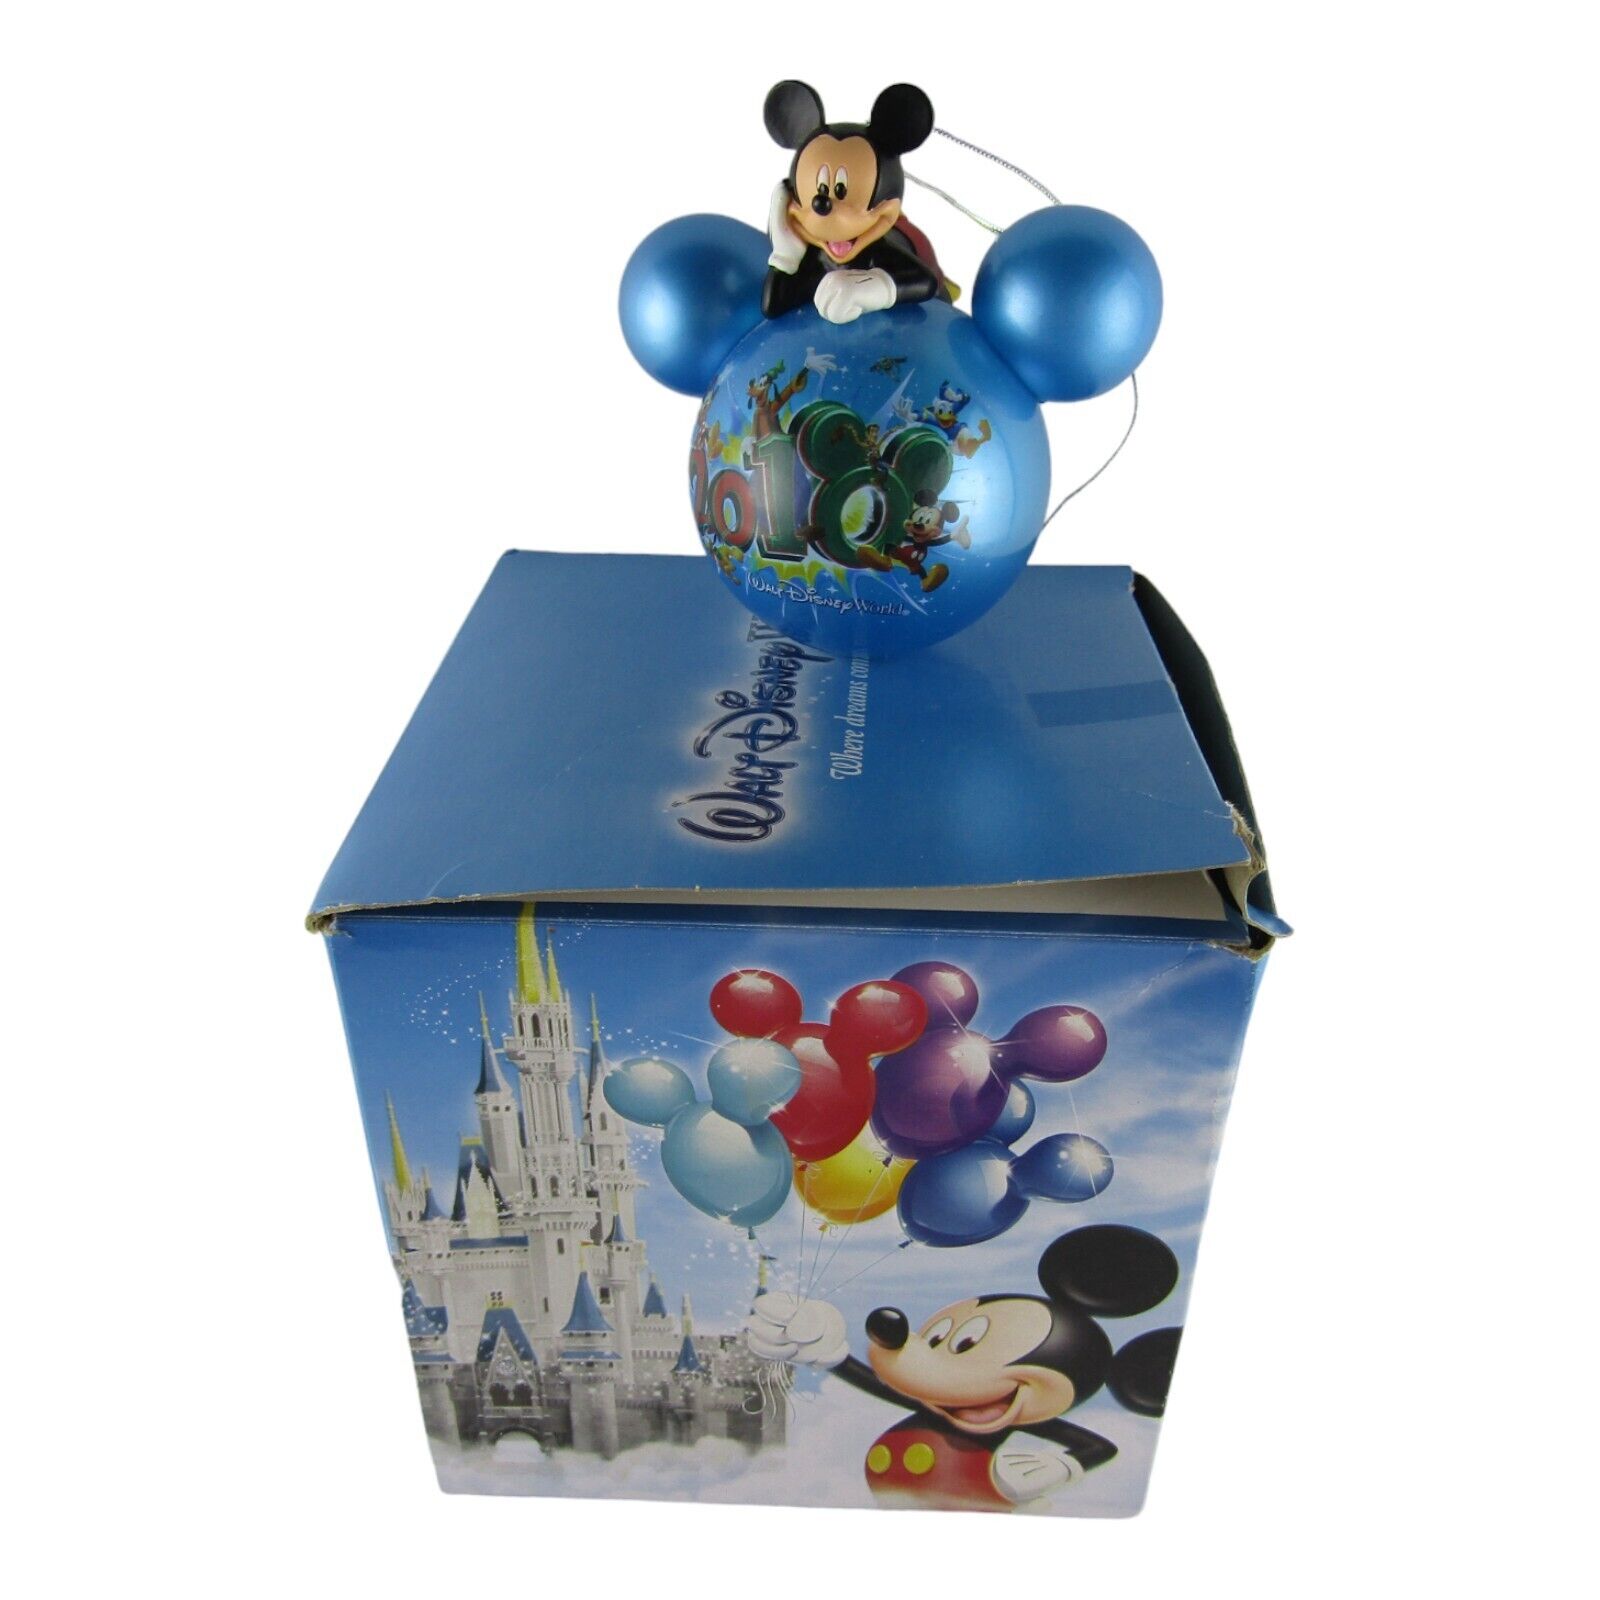 2010 Disney Parks Walt Disney World Mickey Mouse Balloon Ornament w Box